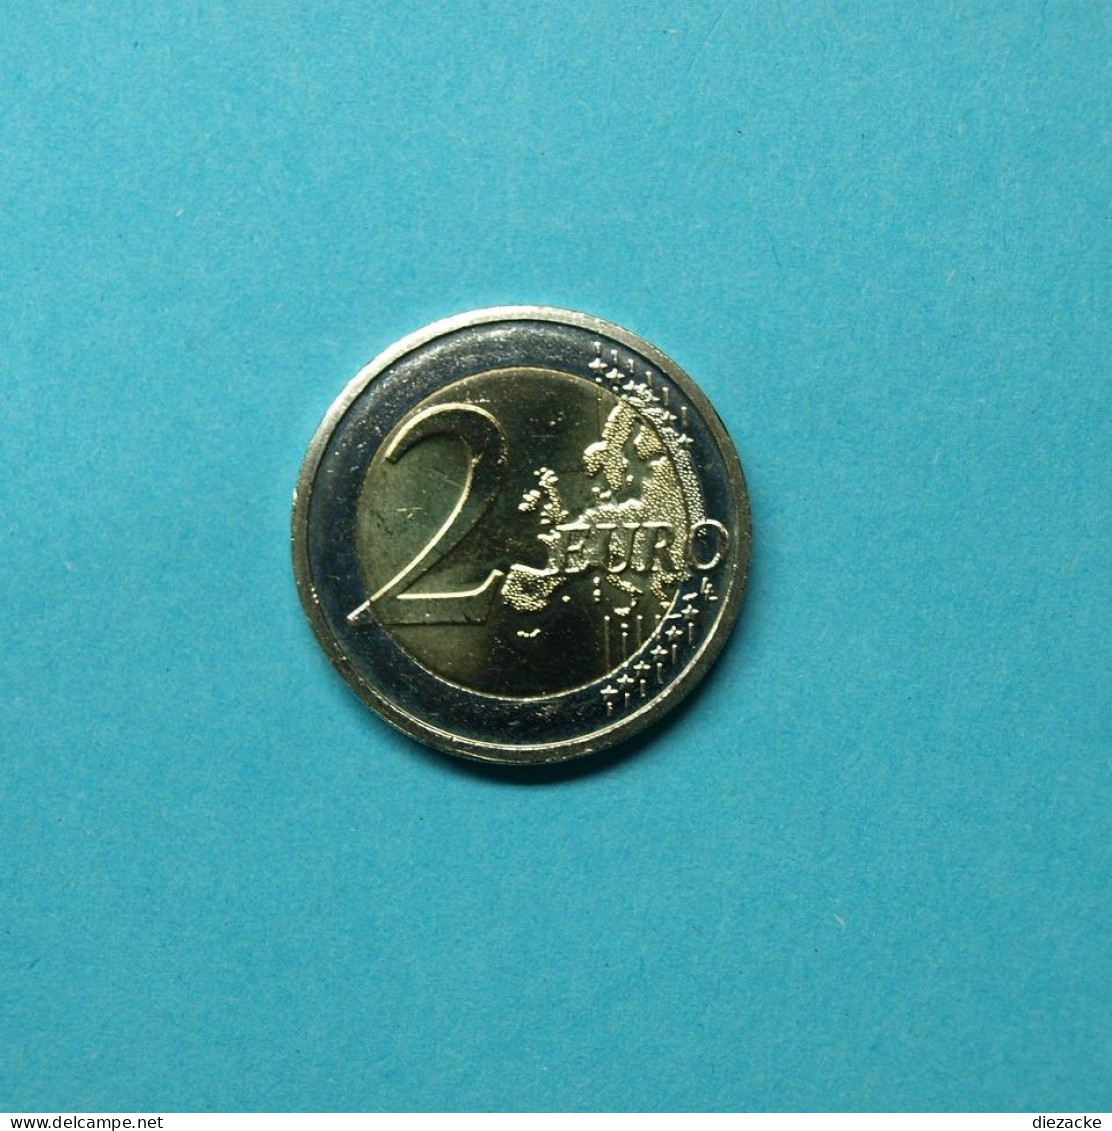 Irland 2012 2 Euro 10 Jahre Euro Bargeld Unzirkuliert (M4413 - Irlanda